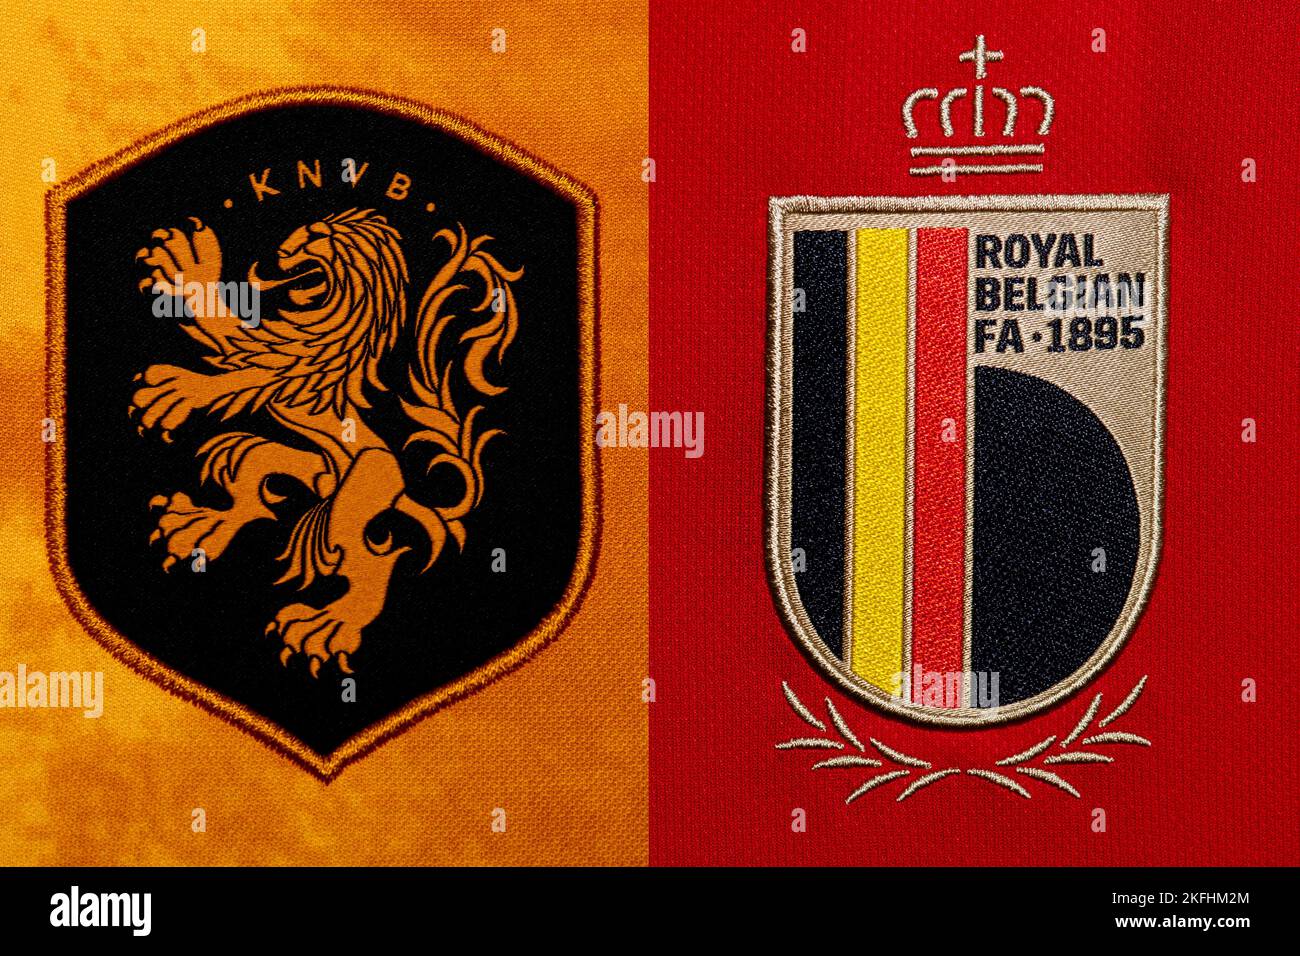 Royal dutch football logo hi-res stock photography and images - Alamy